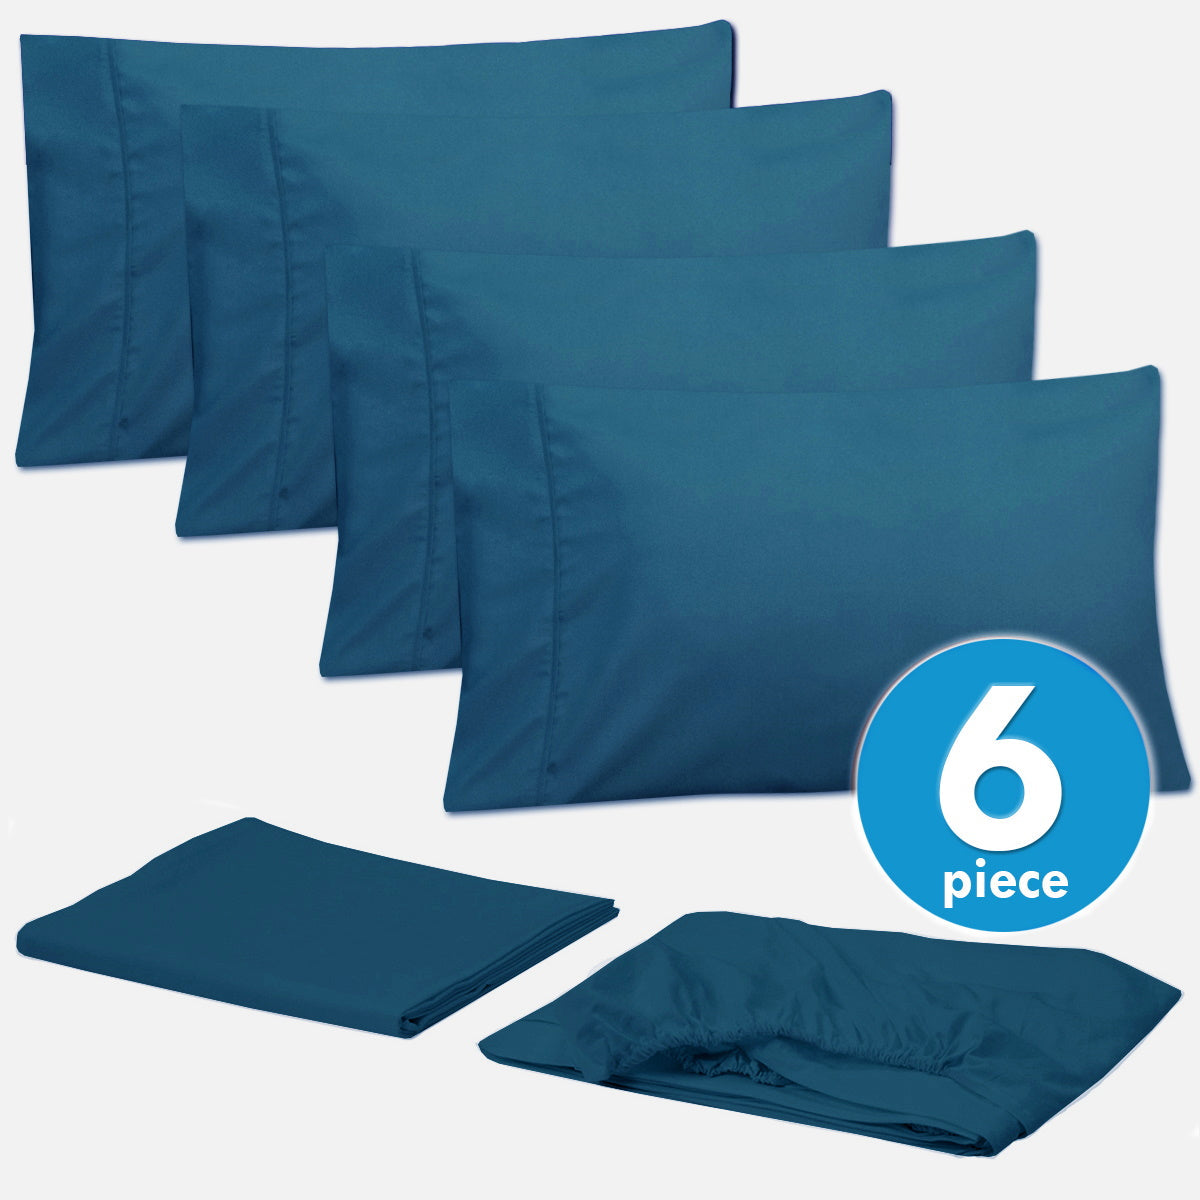 Deluxe 6-Piece Bed Sheet Set (Teal) - Set